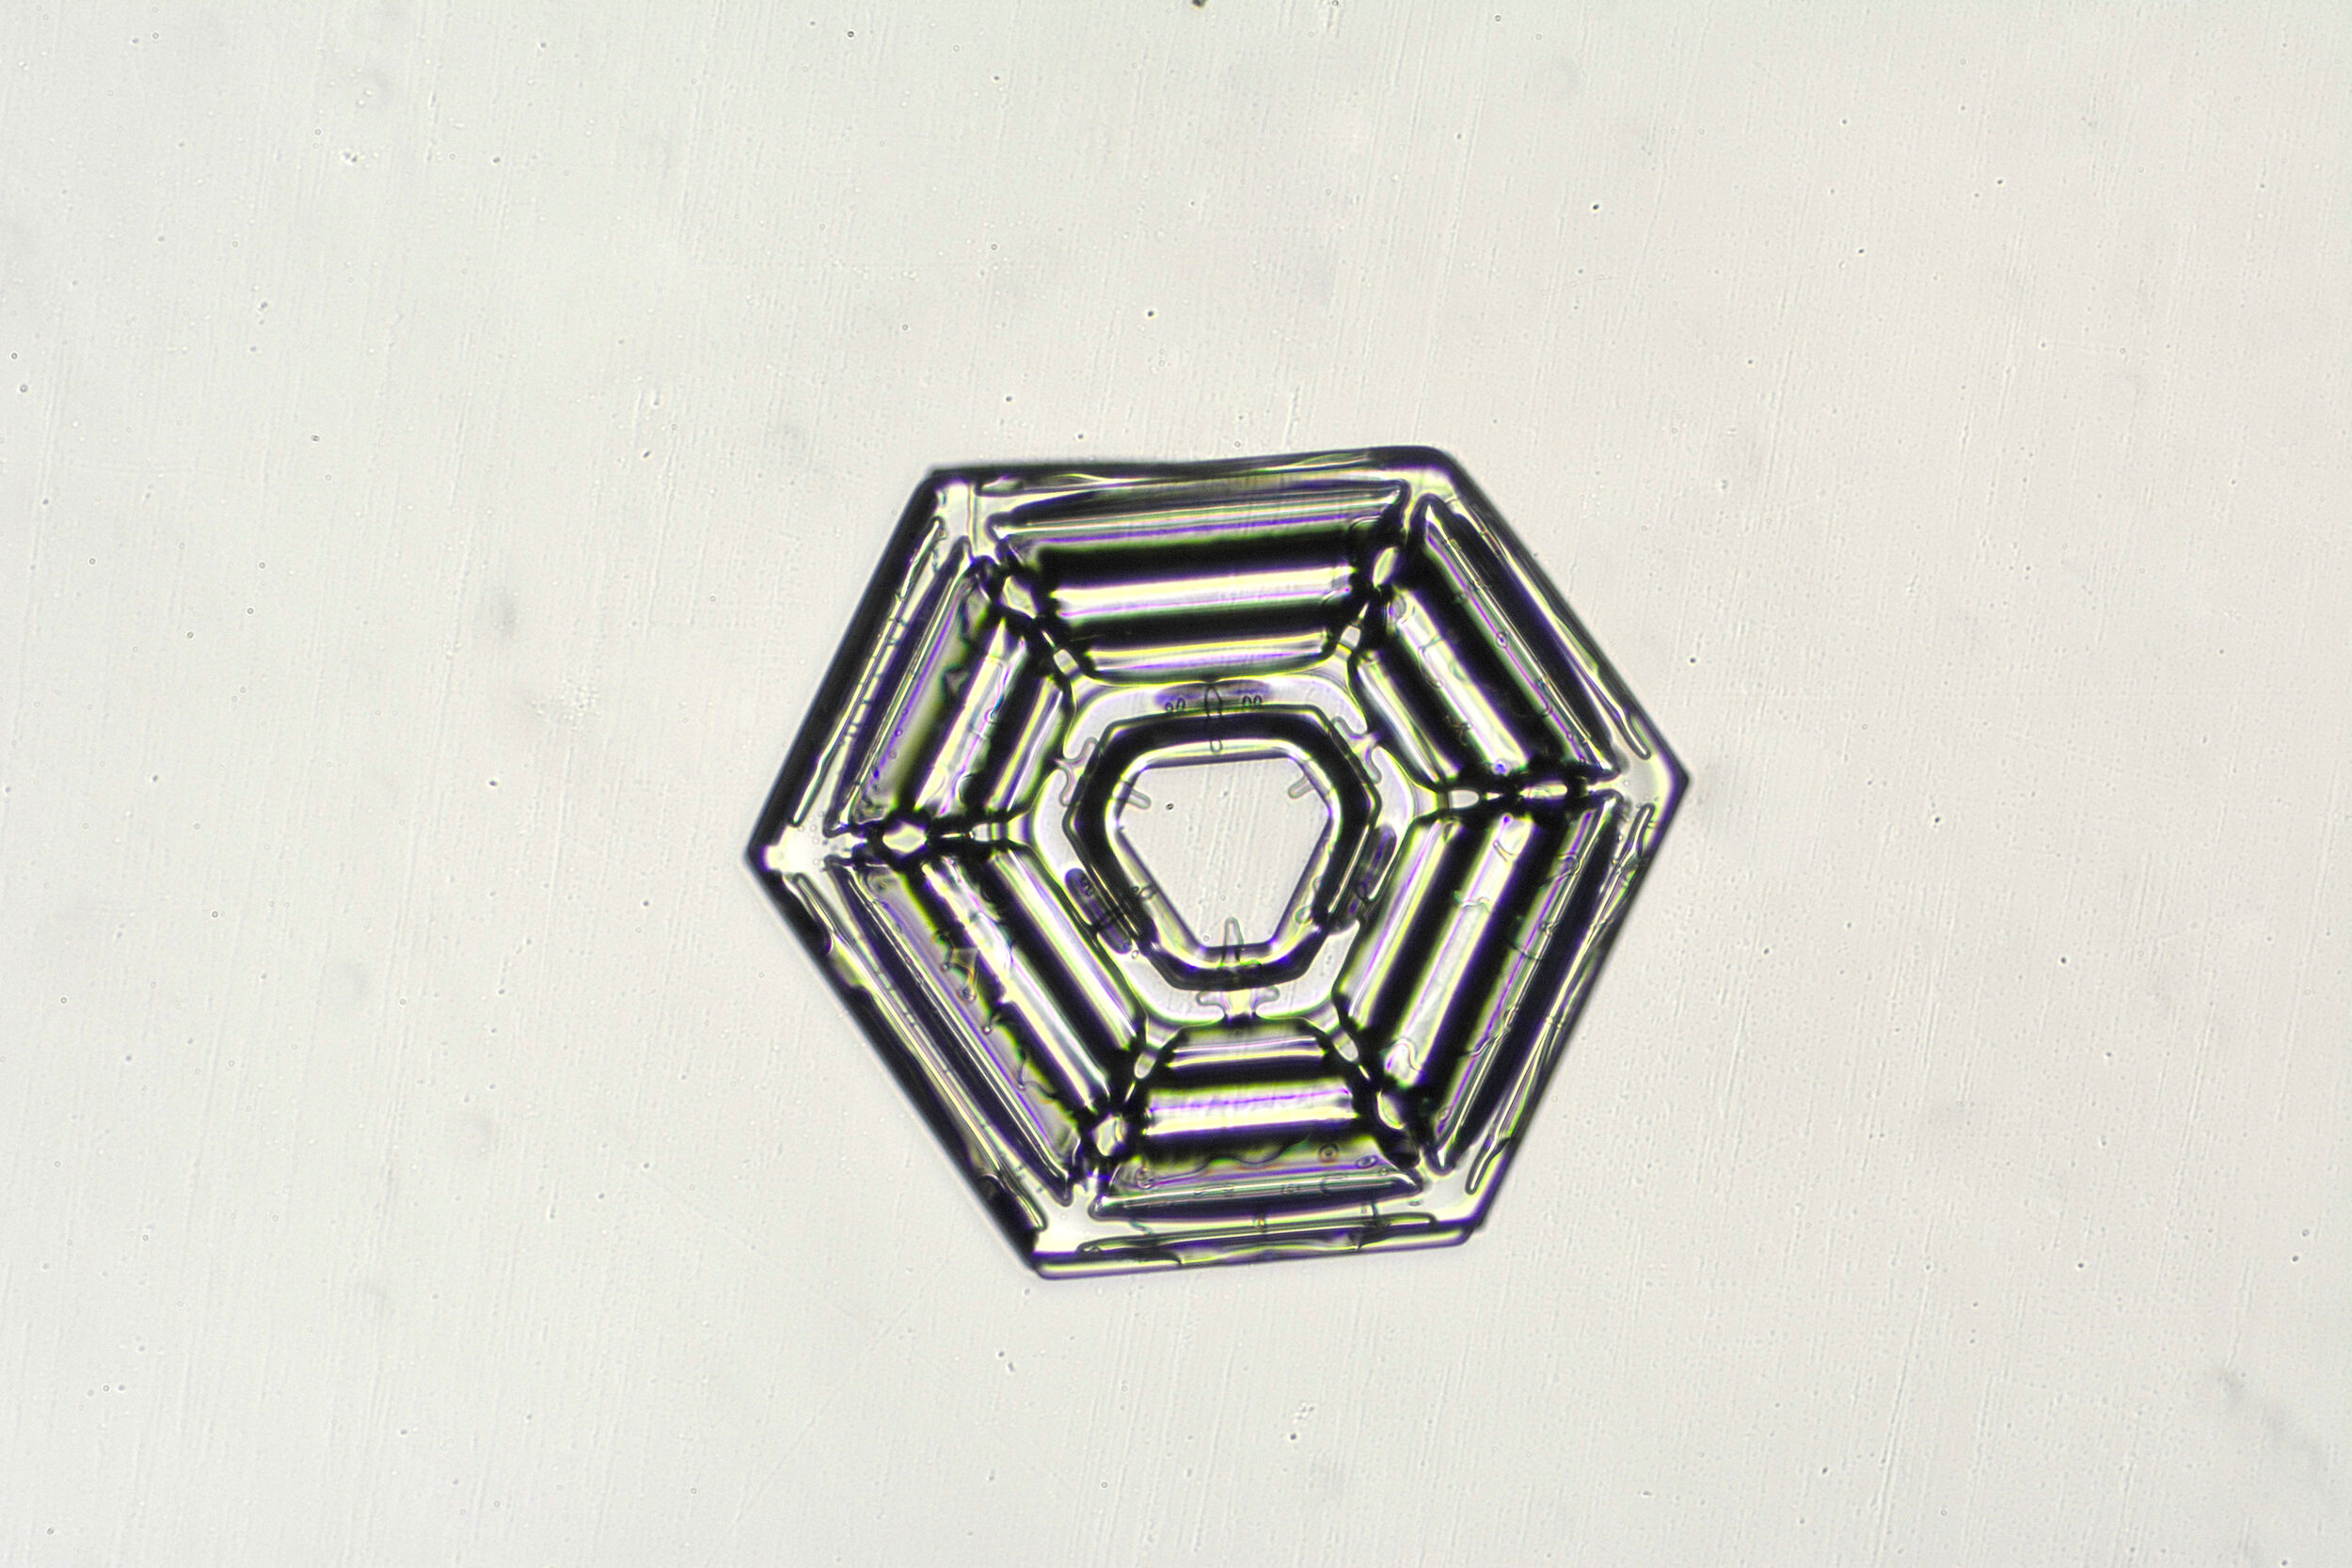 Gary-Mawe-Hexagonal-Plate-Snowflake-08.jpg